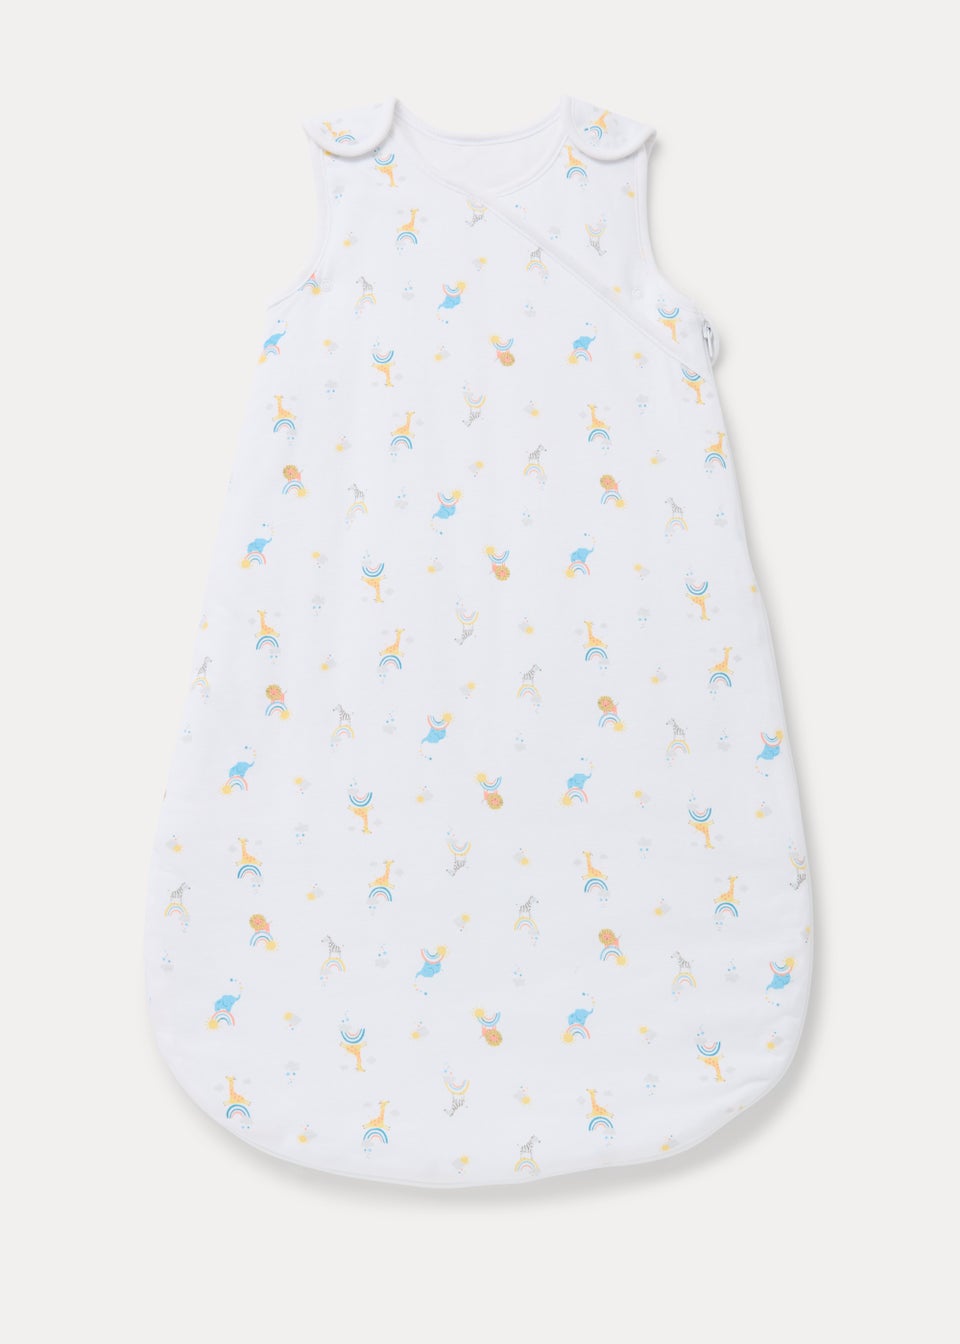 White Rainbow Baby Sleeping Bag 1.5 Tog (Newborn-18mths)